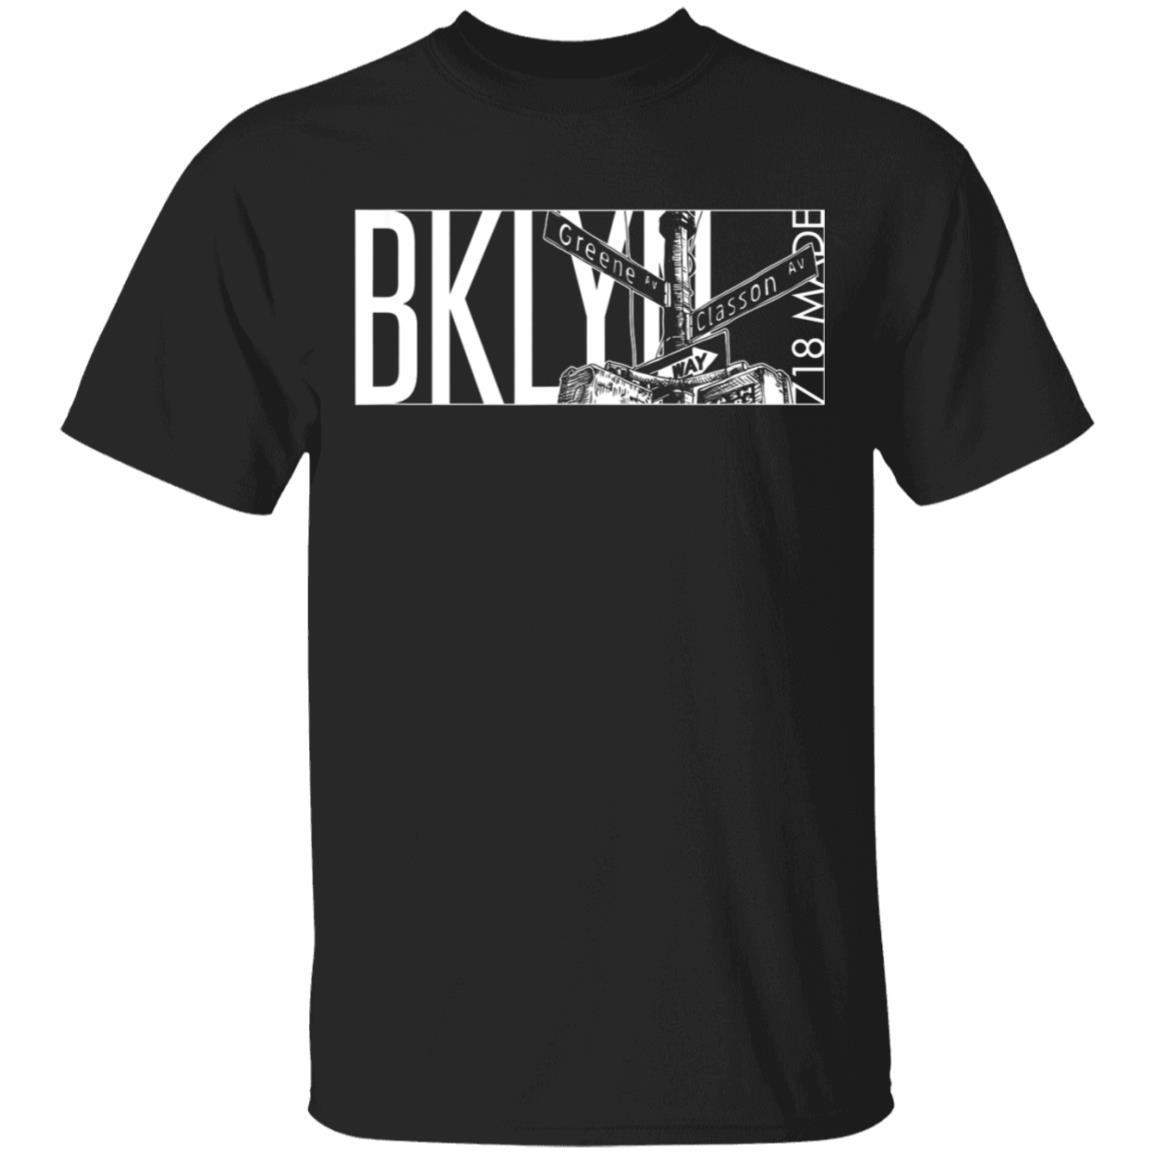 Brooklyn New York City BKLYN 718 T-Shirt Long Sleeve Hoodie